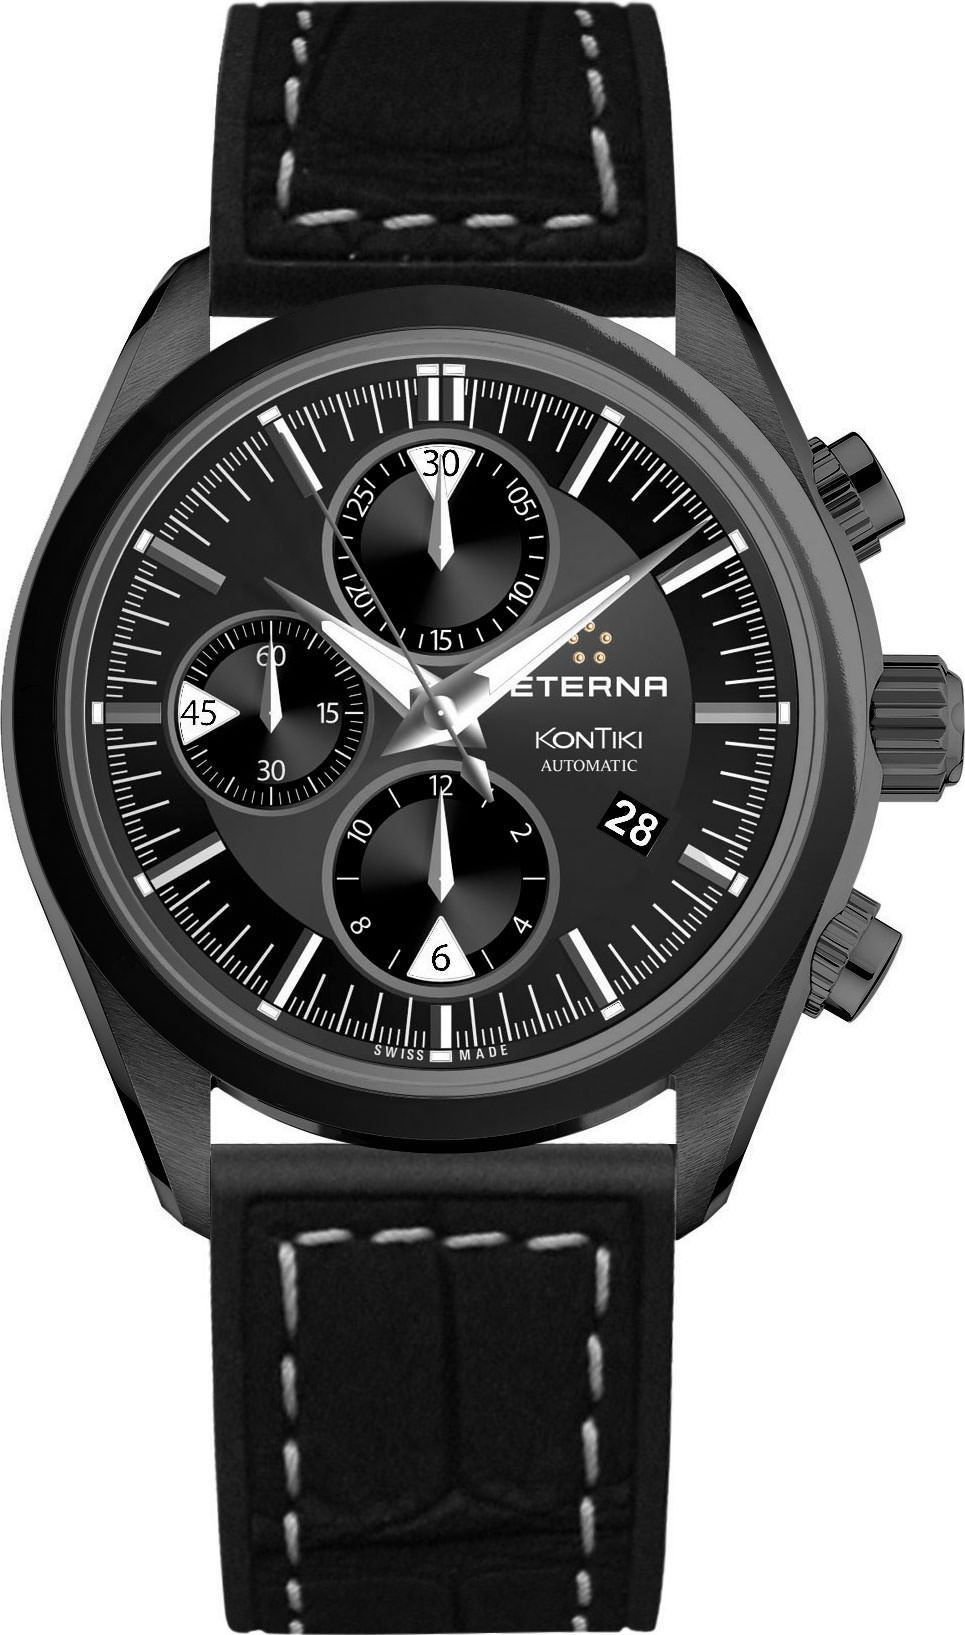 Eterna KonTiki  Black Dial 42 mm Automatic Watch For Men - 1